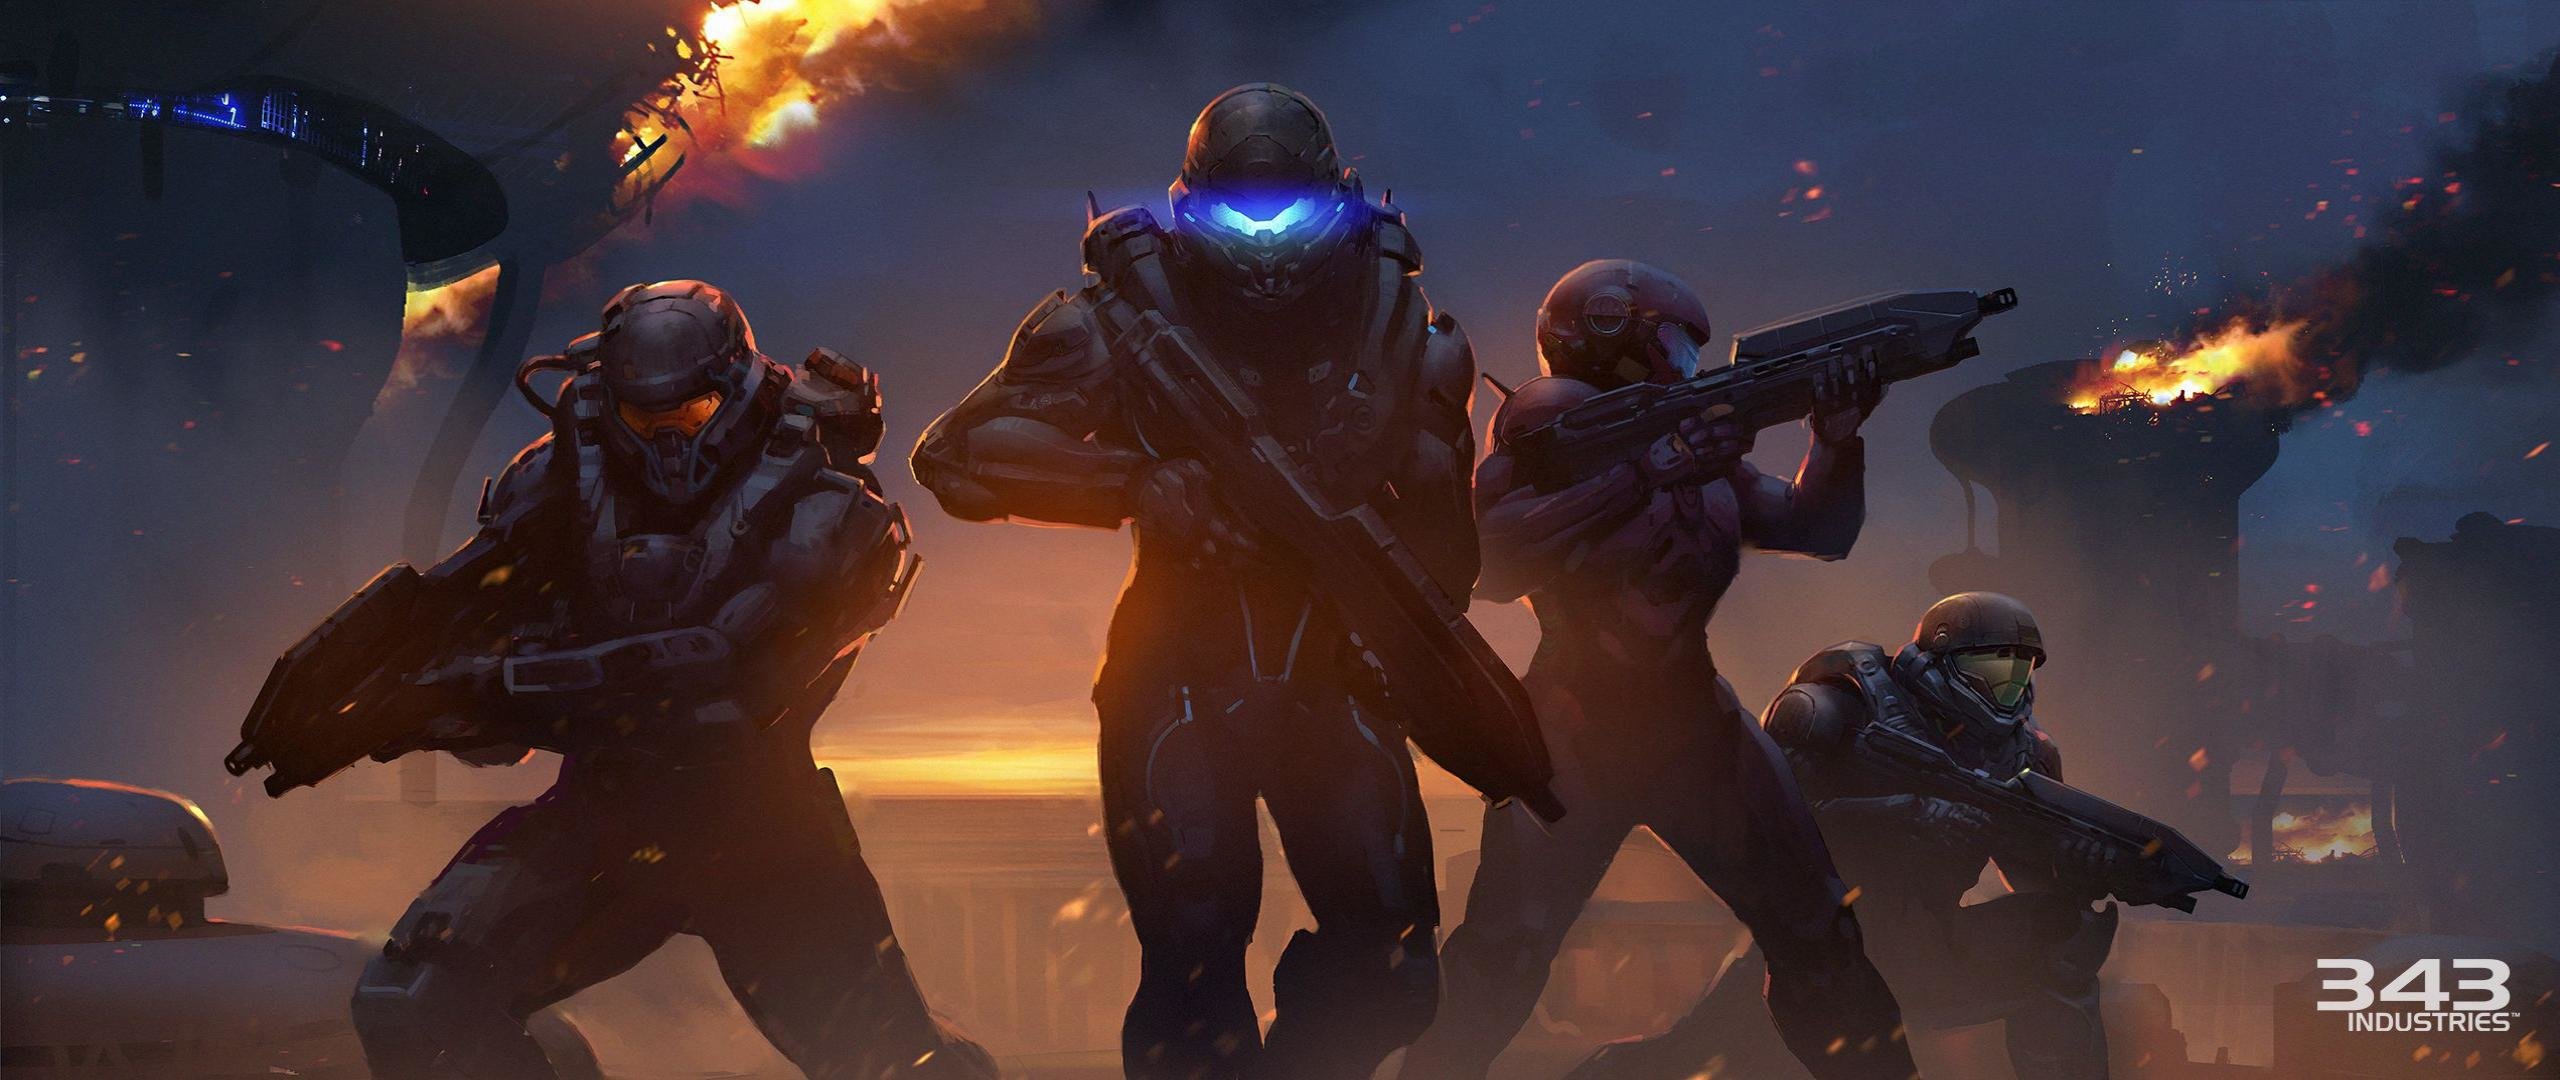 Free download Halo 5: Guardians wallpaper ID:116970 hd 2560x1080 for desktop